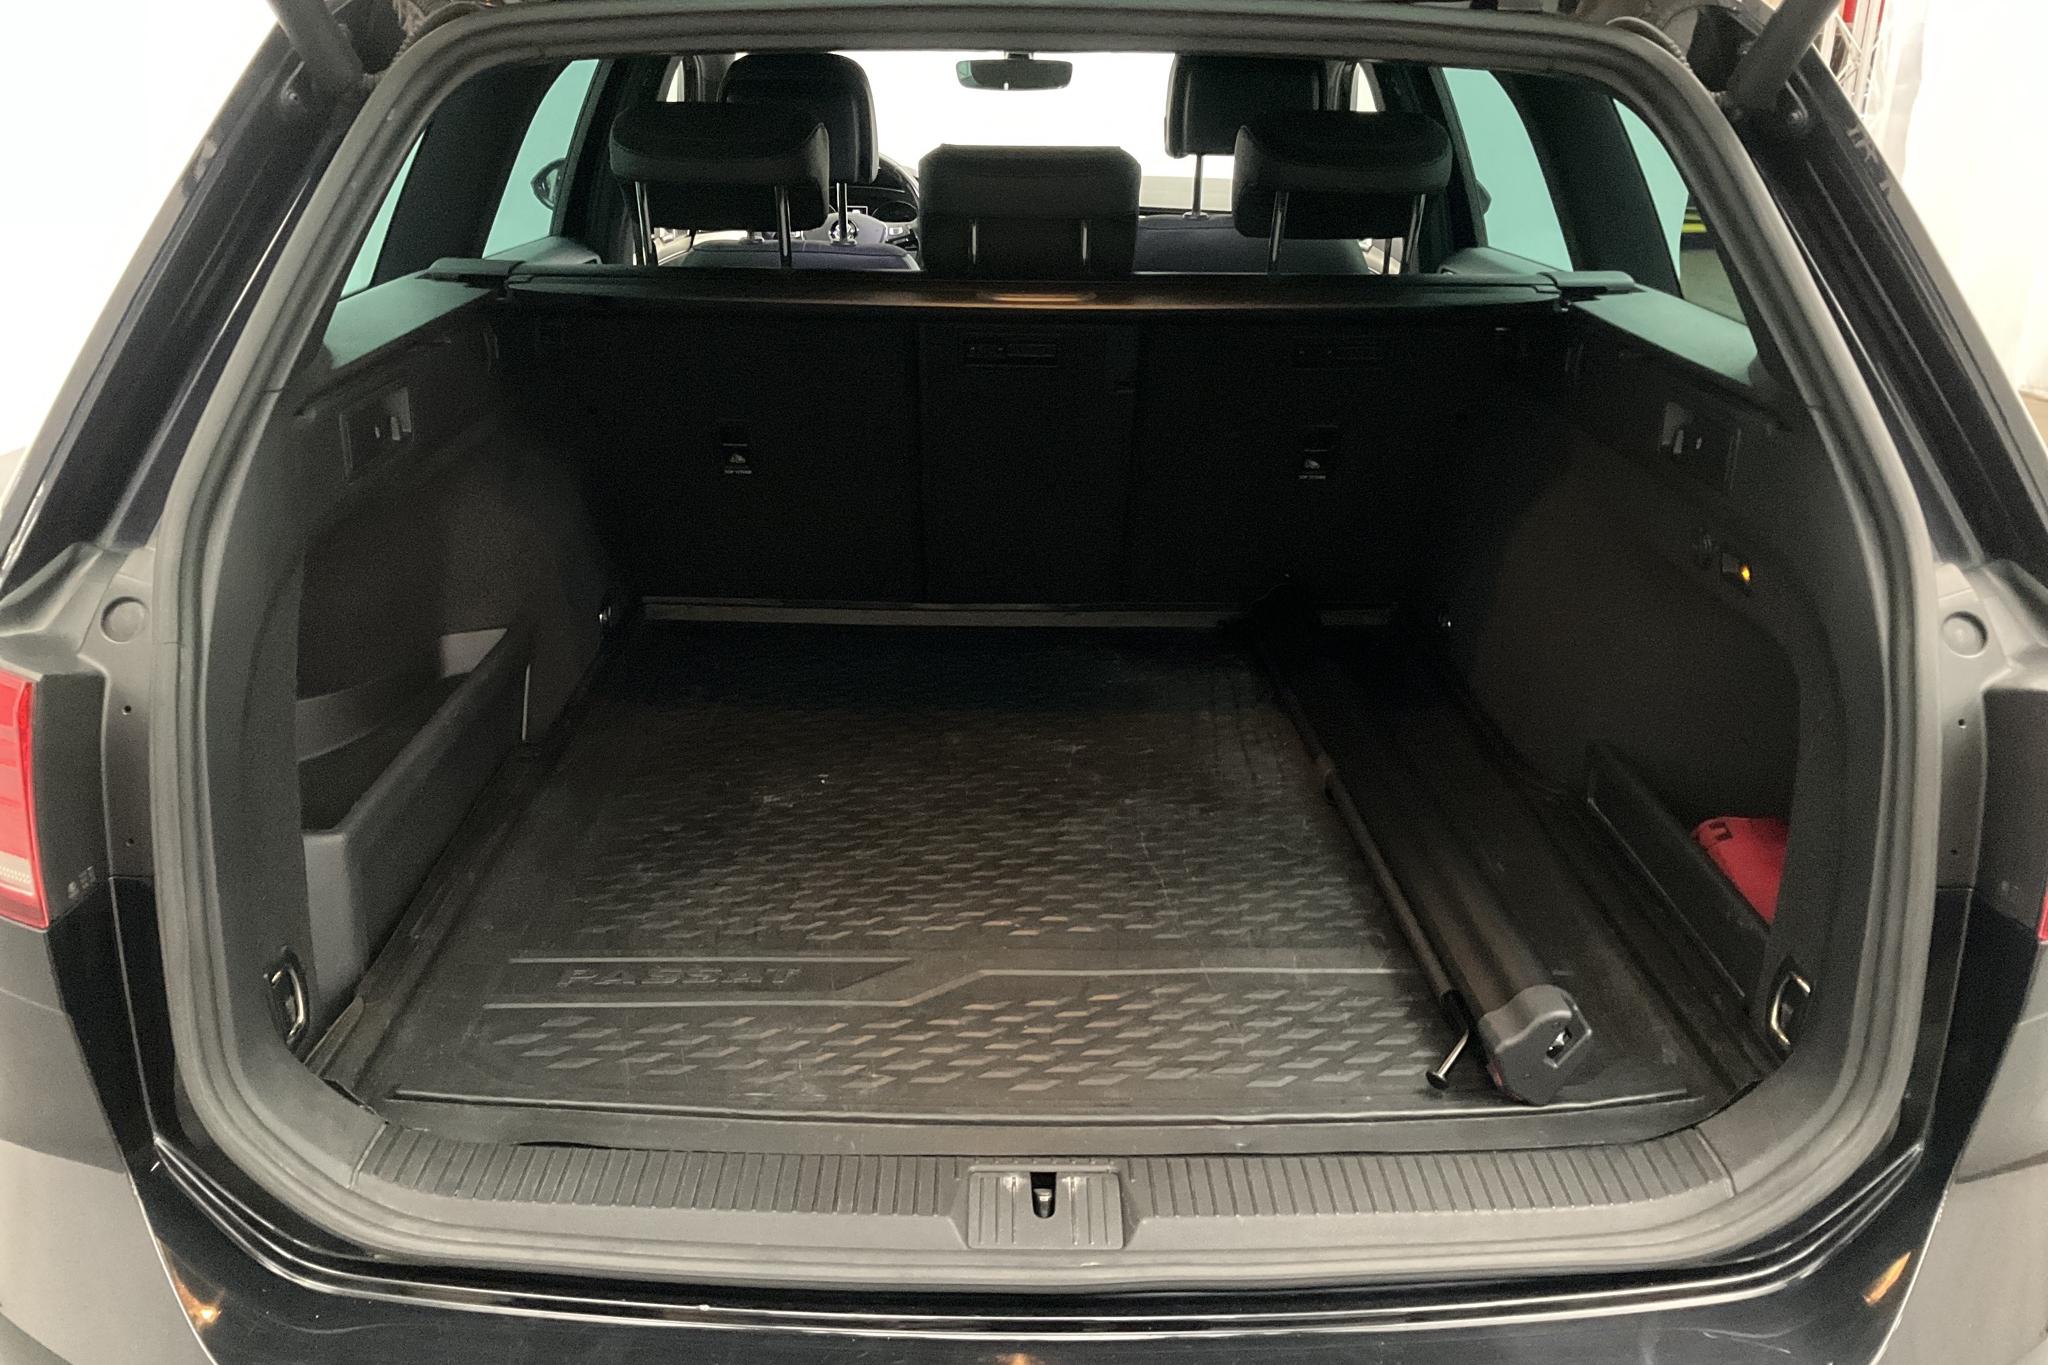 VW Passat Alltrack 2.0 TDI 4MOTION (190hk) - 131 290 km - Automatic - black - 2017